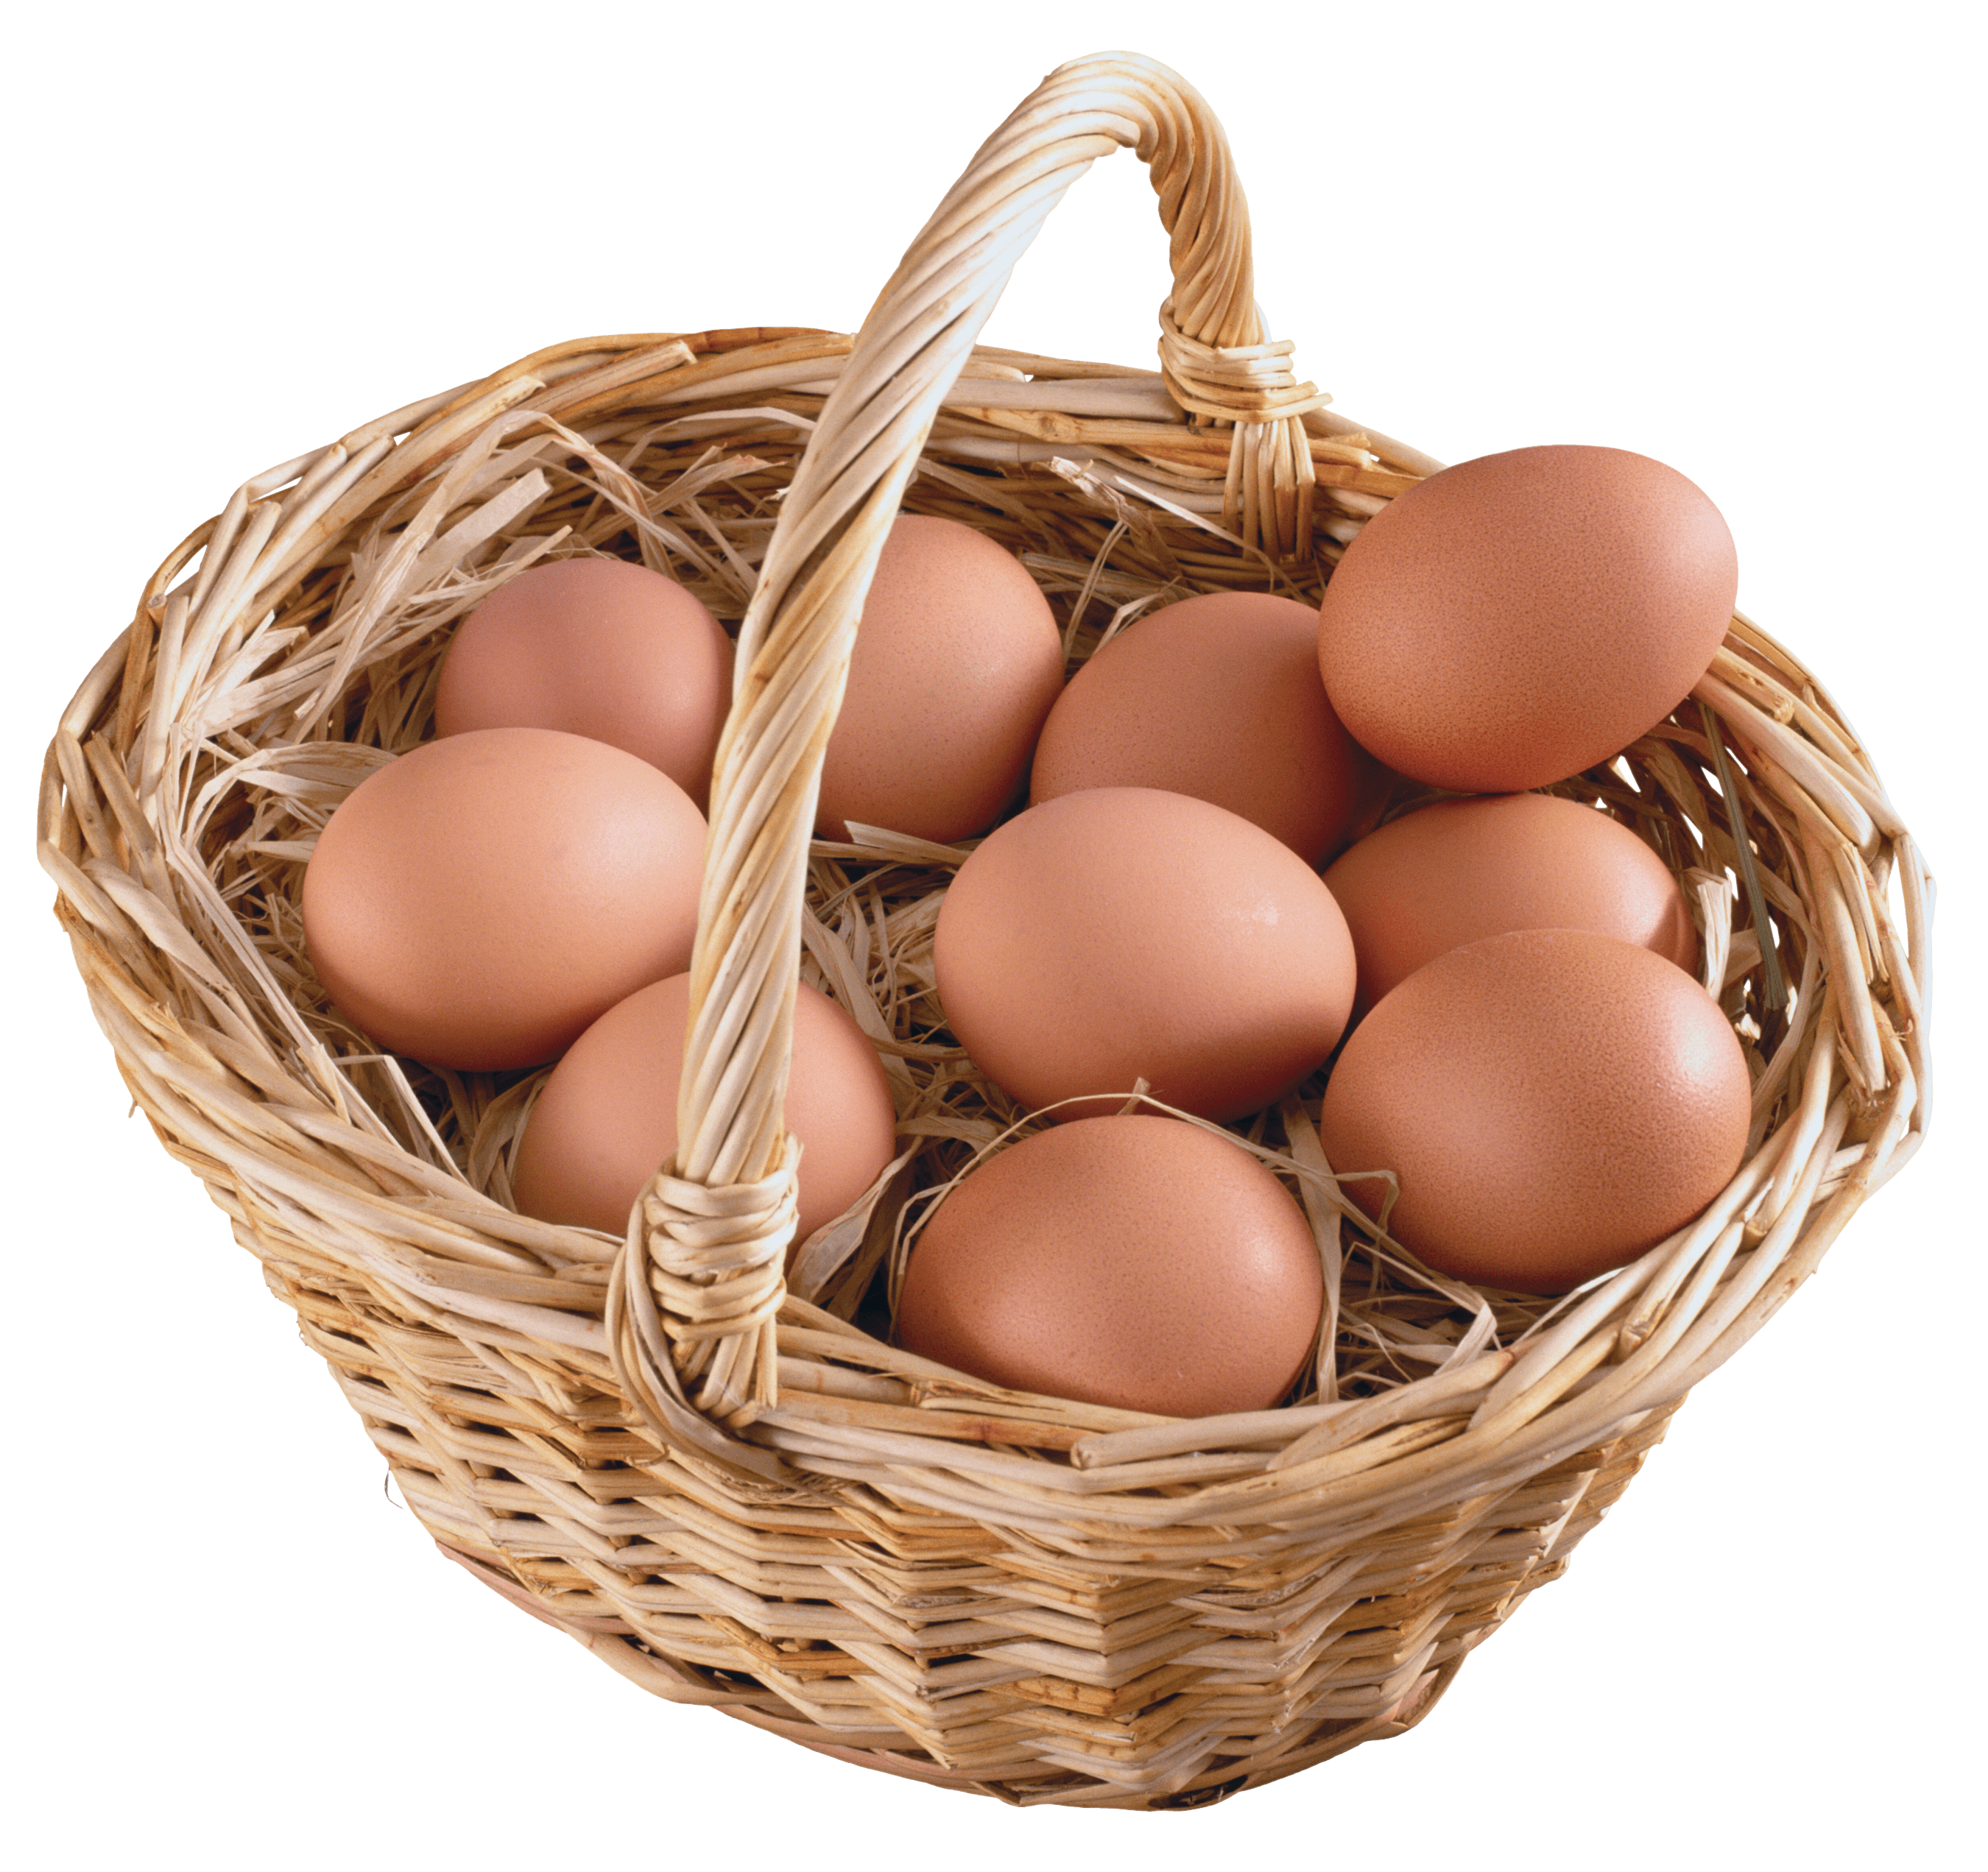 Download Free Eggs Png Image ICON favicon | FreePNGImg